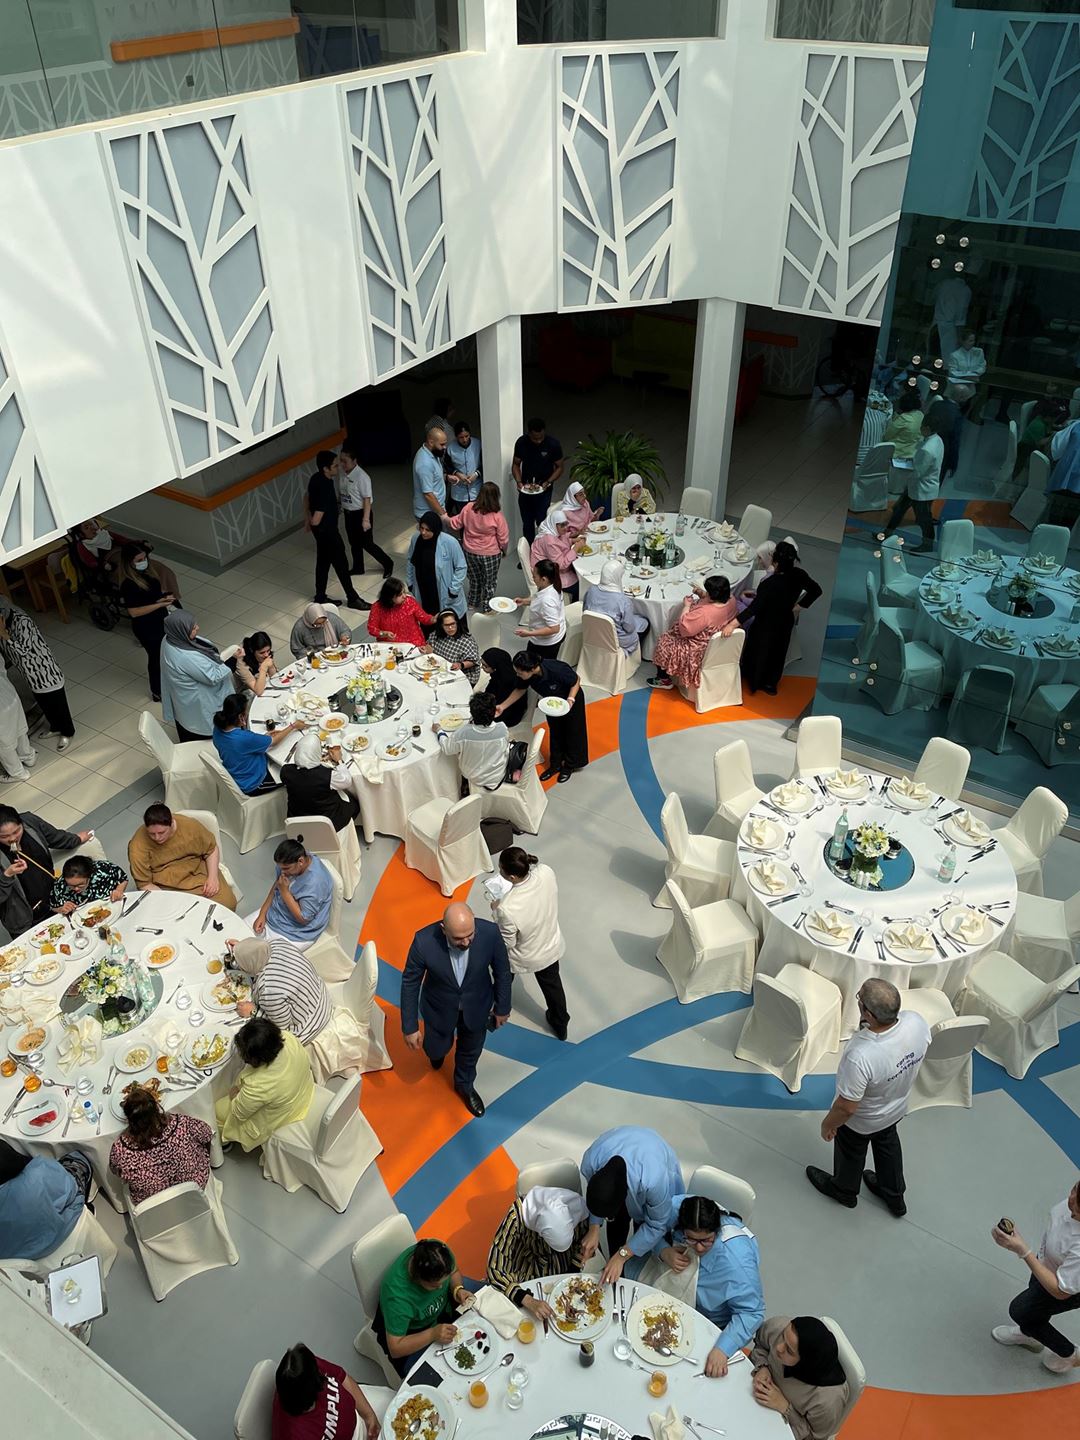 Grand Hyatt Kuwait and Hyatt Regency host a fun-packed brunch event for the differently-abled children